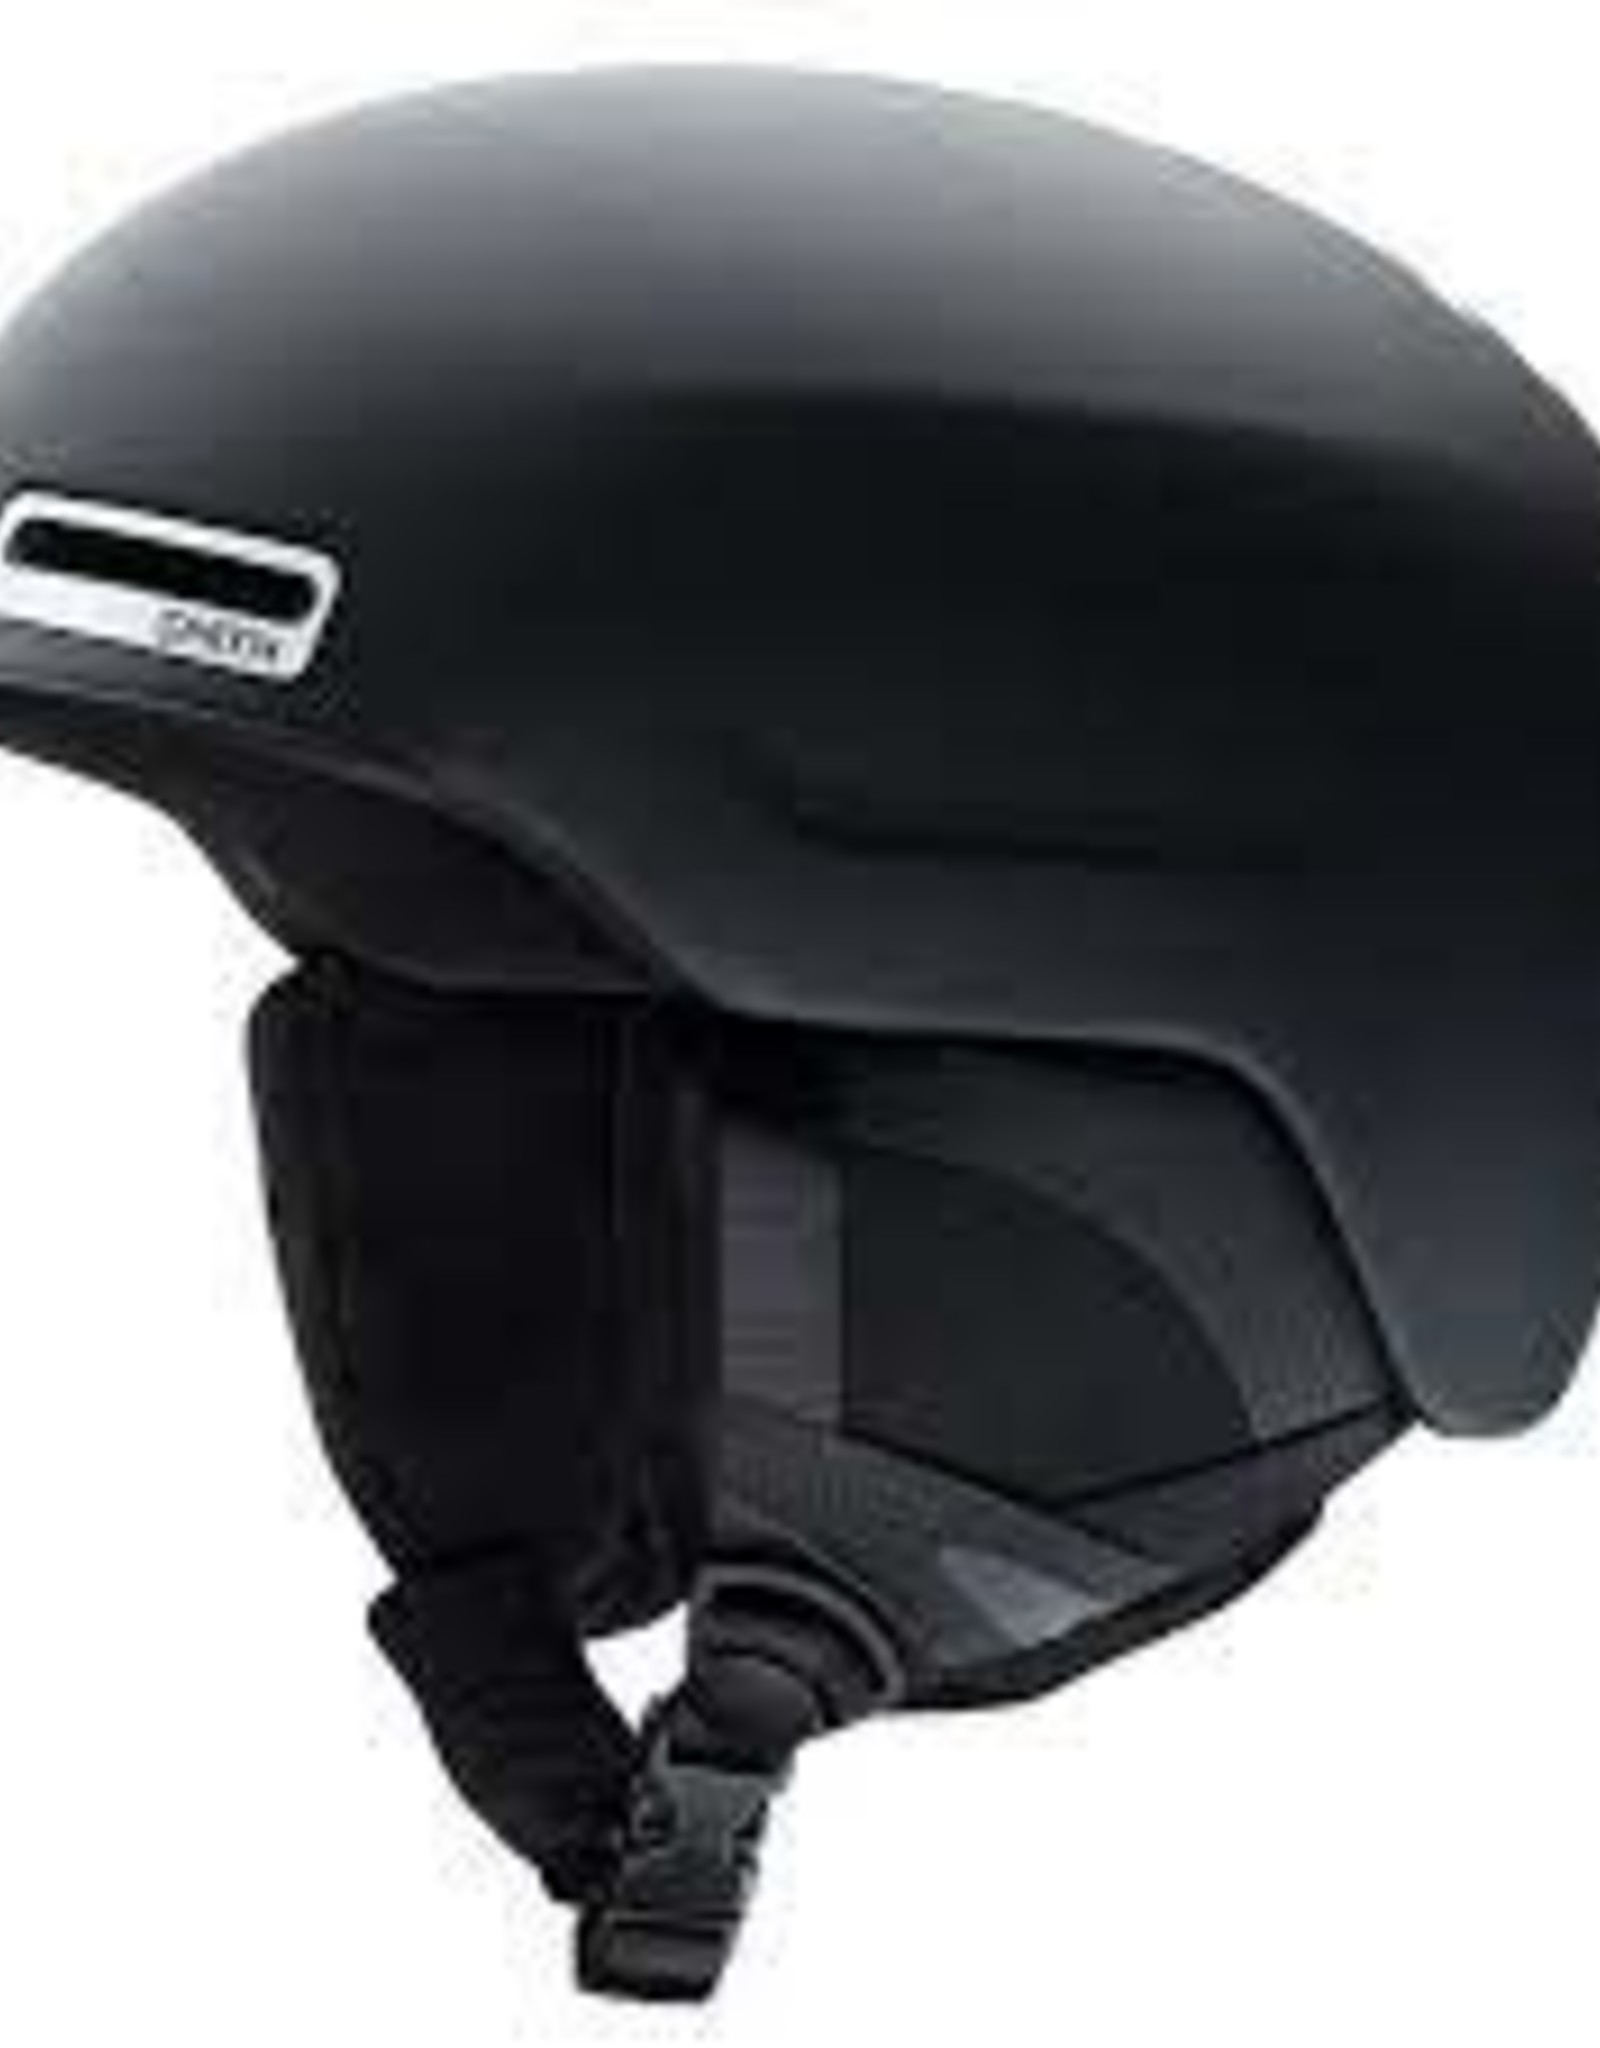 SMITH Smith Maze Helmet - MATT BLACK